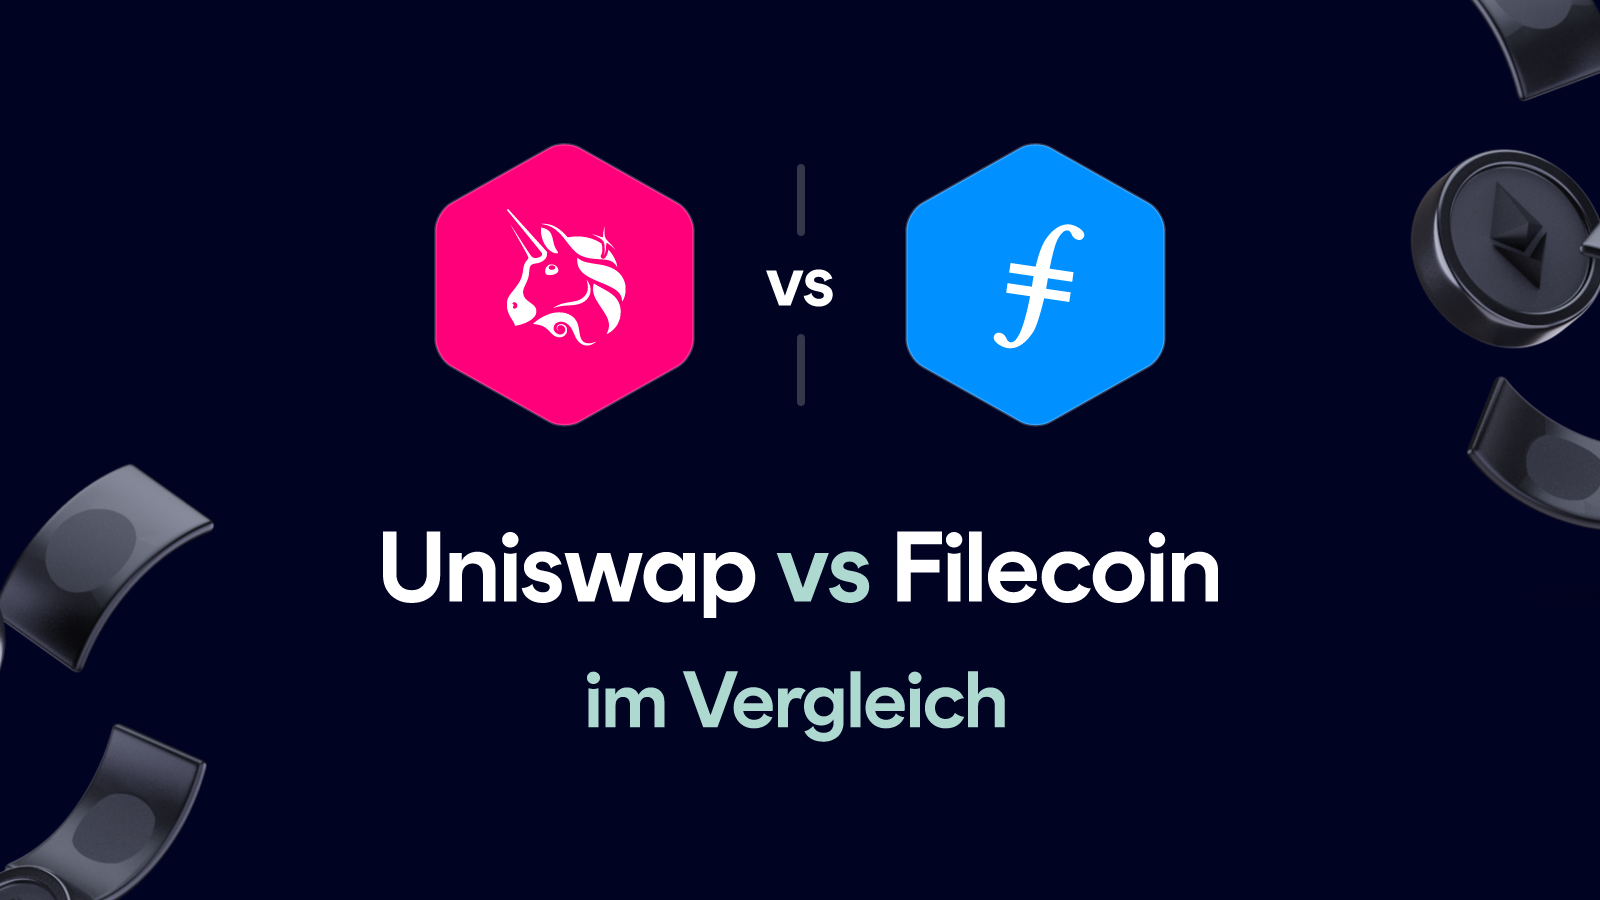 Uniswap vs Filecoin